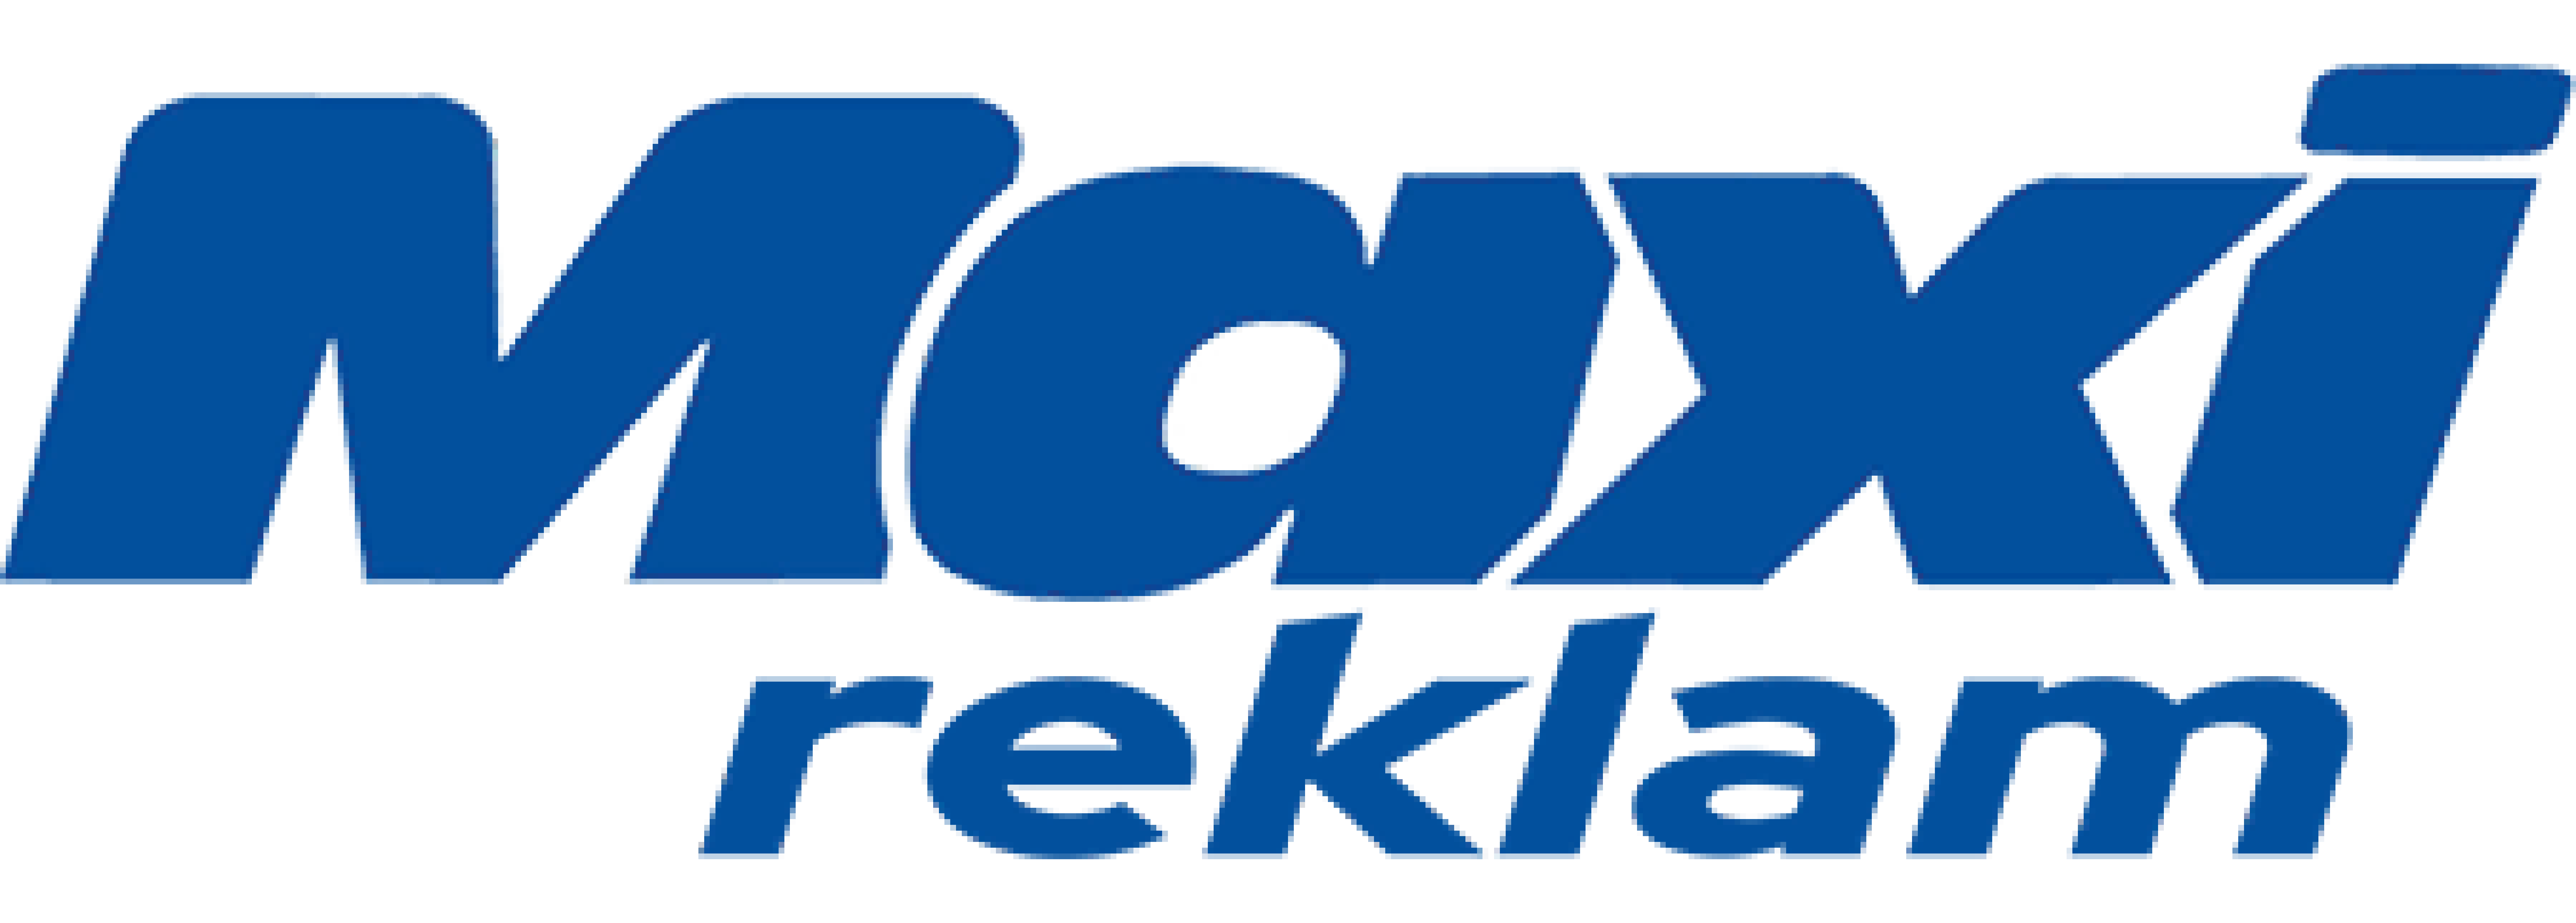 maxi screen skylt reklam logo